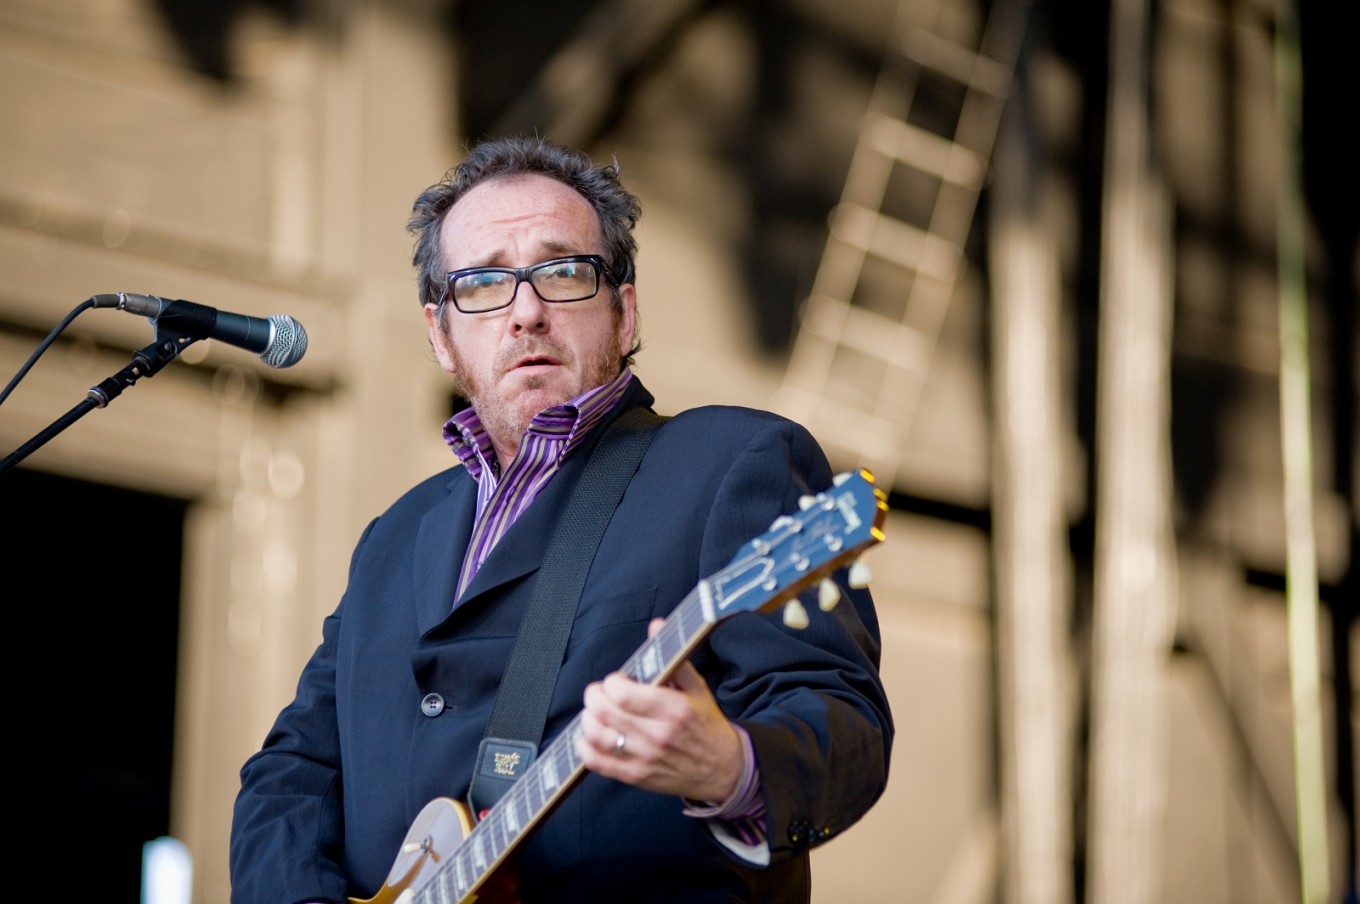 Singer Elvis Costello cancels tour after revealing cancer surgery ...